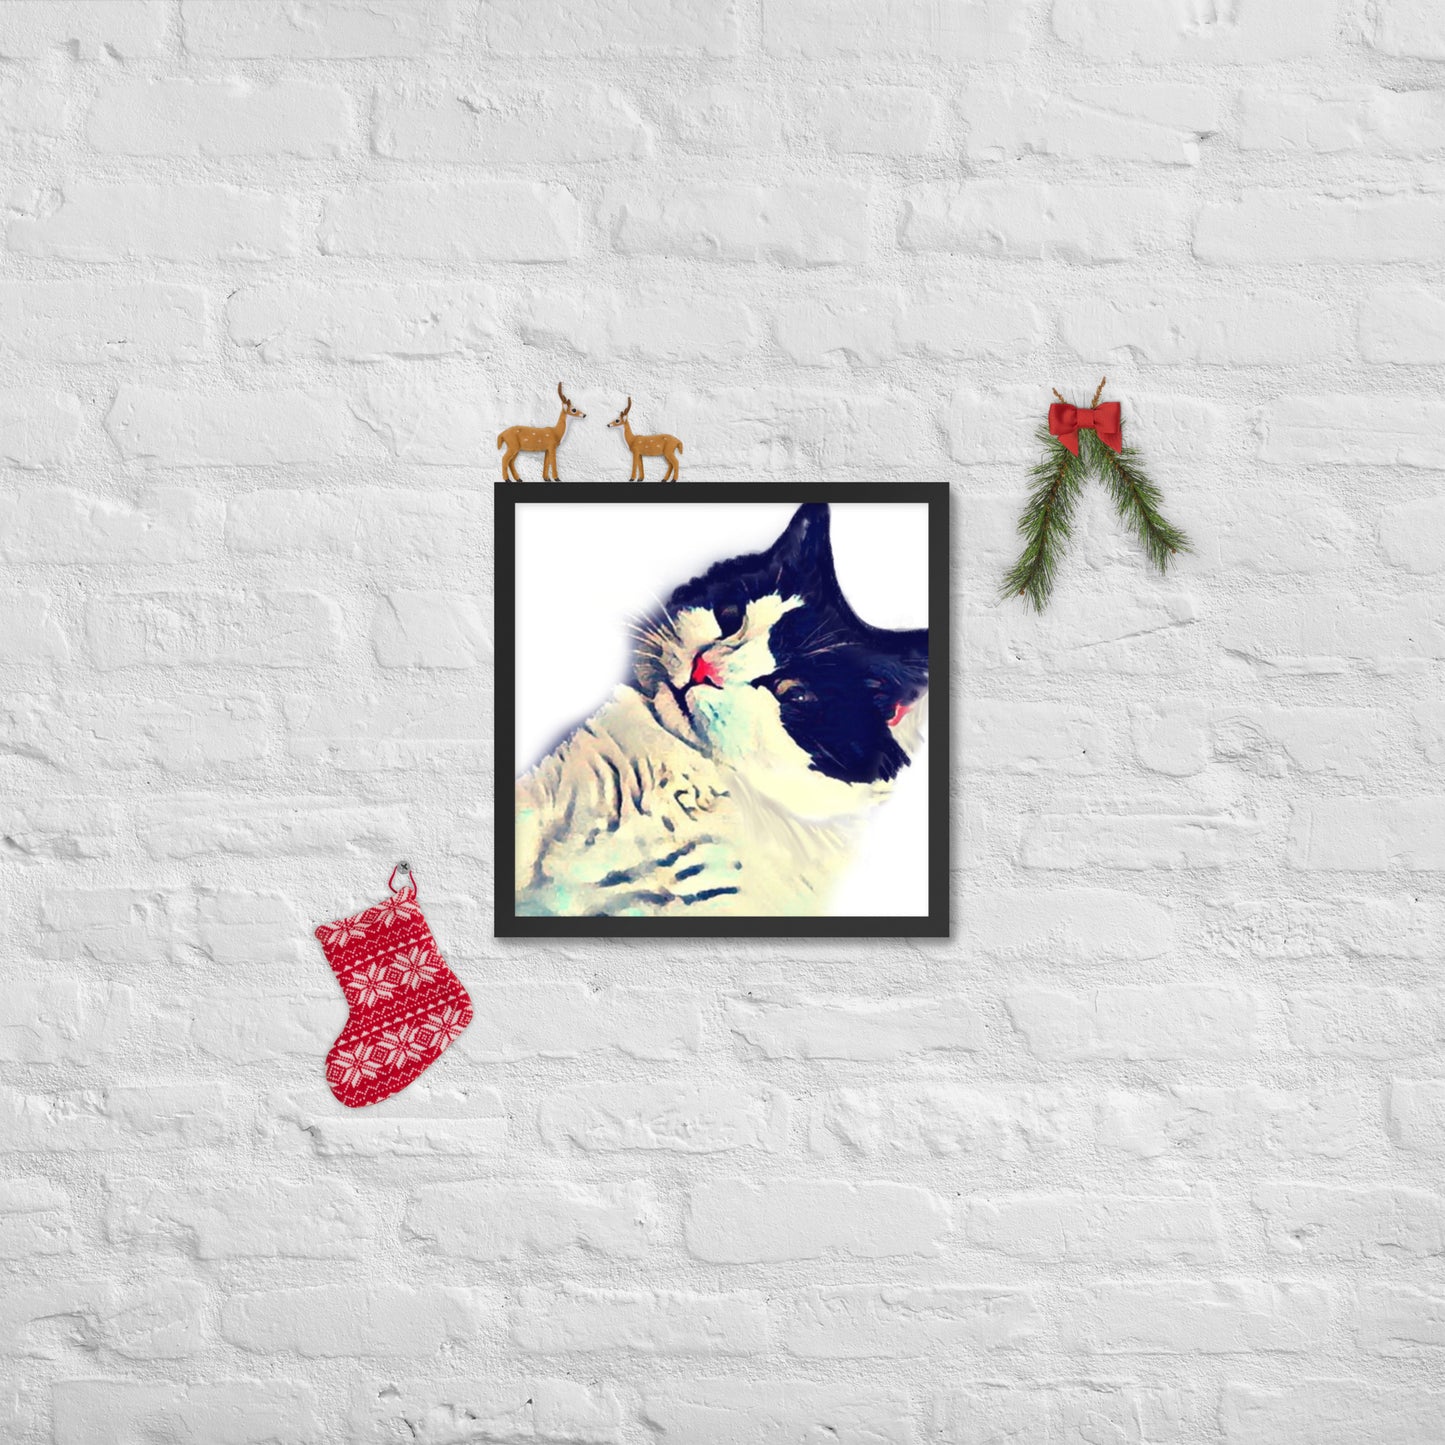 Tuxedo Cat Selfie Framed photo paper poster - A. Mandaline Art